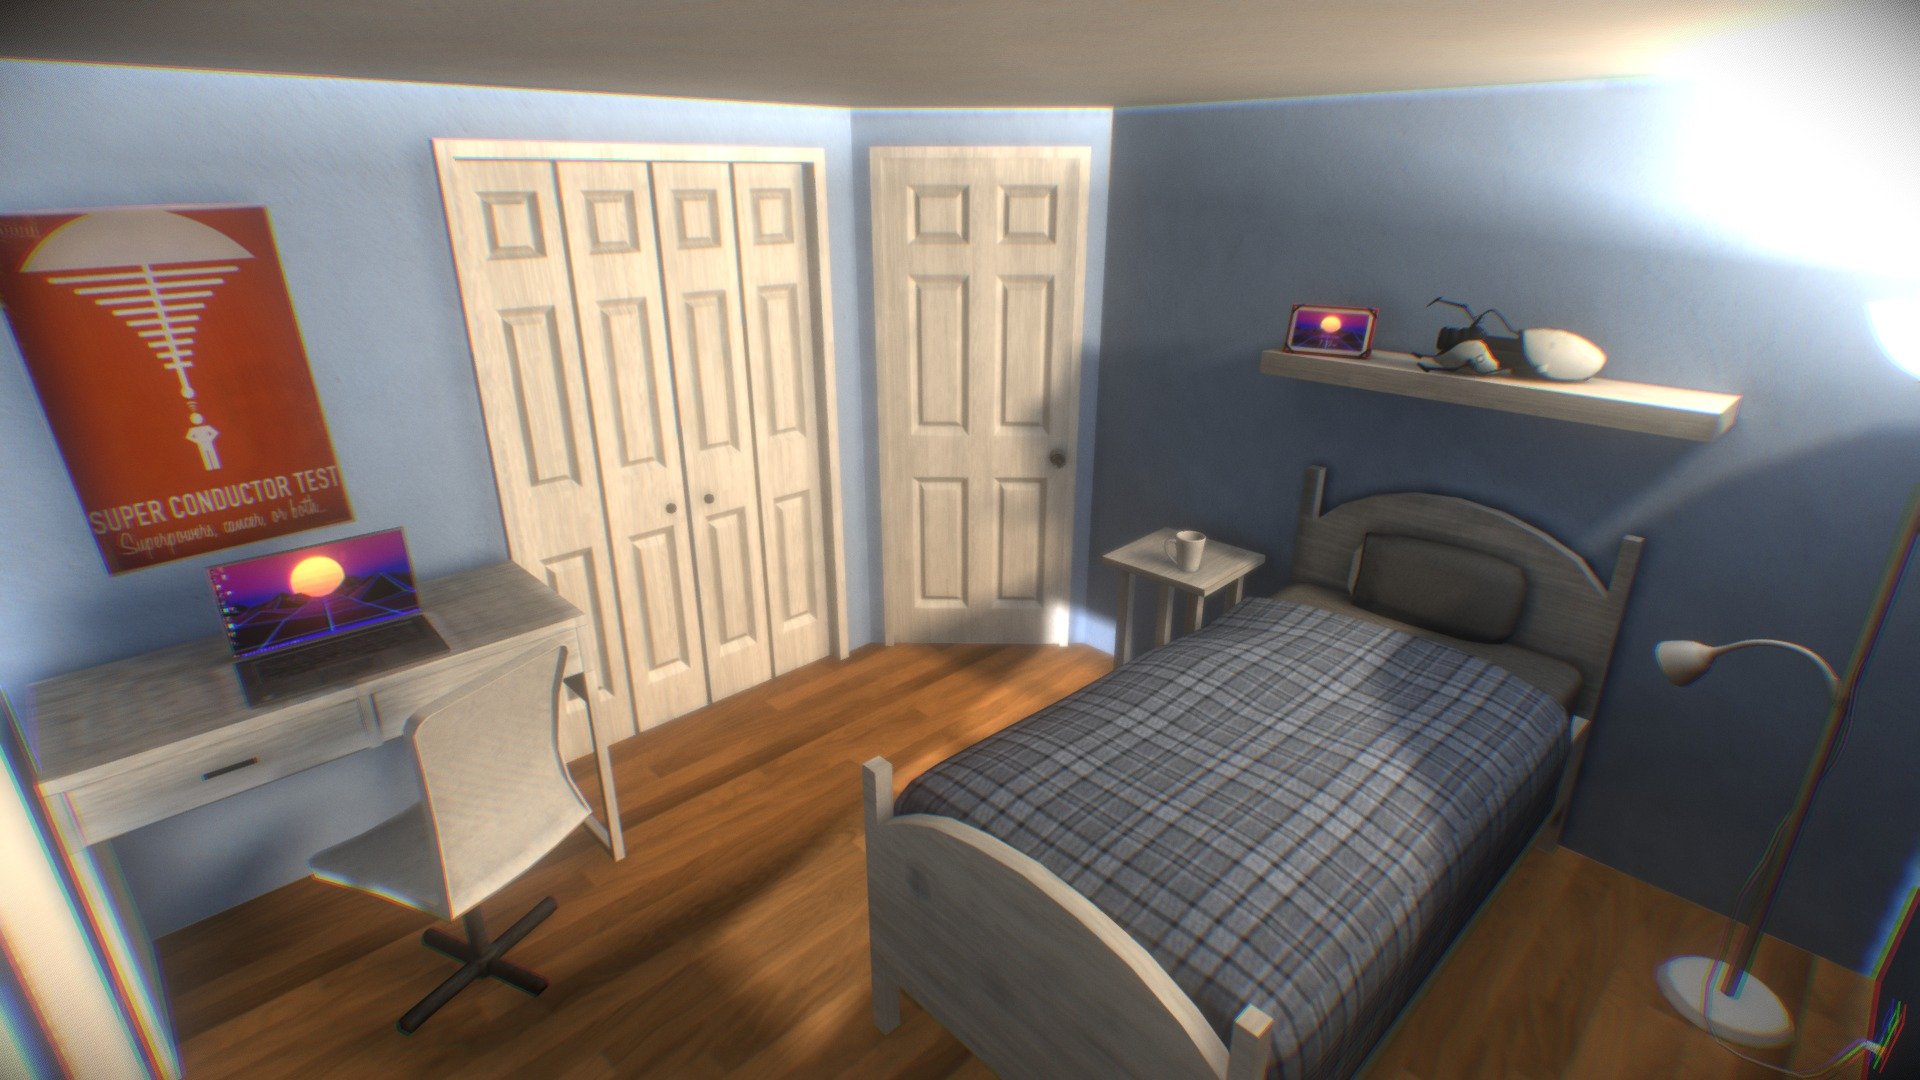 My Bedroom - View in VR